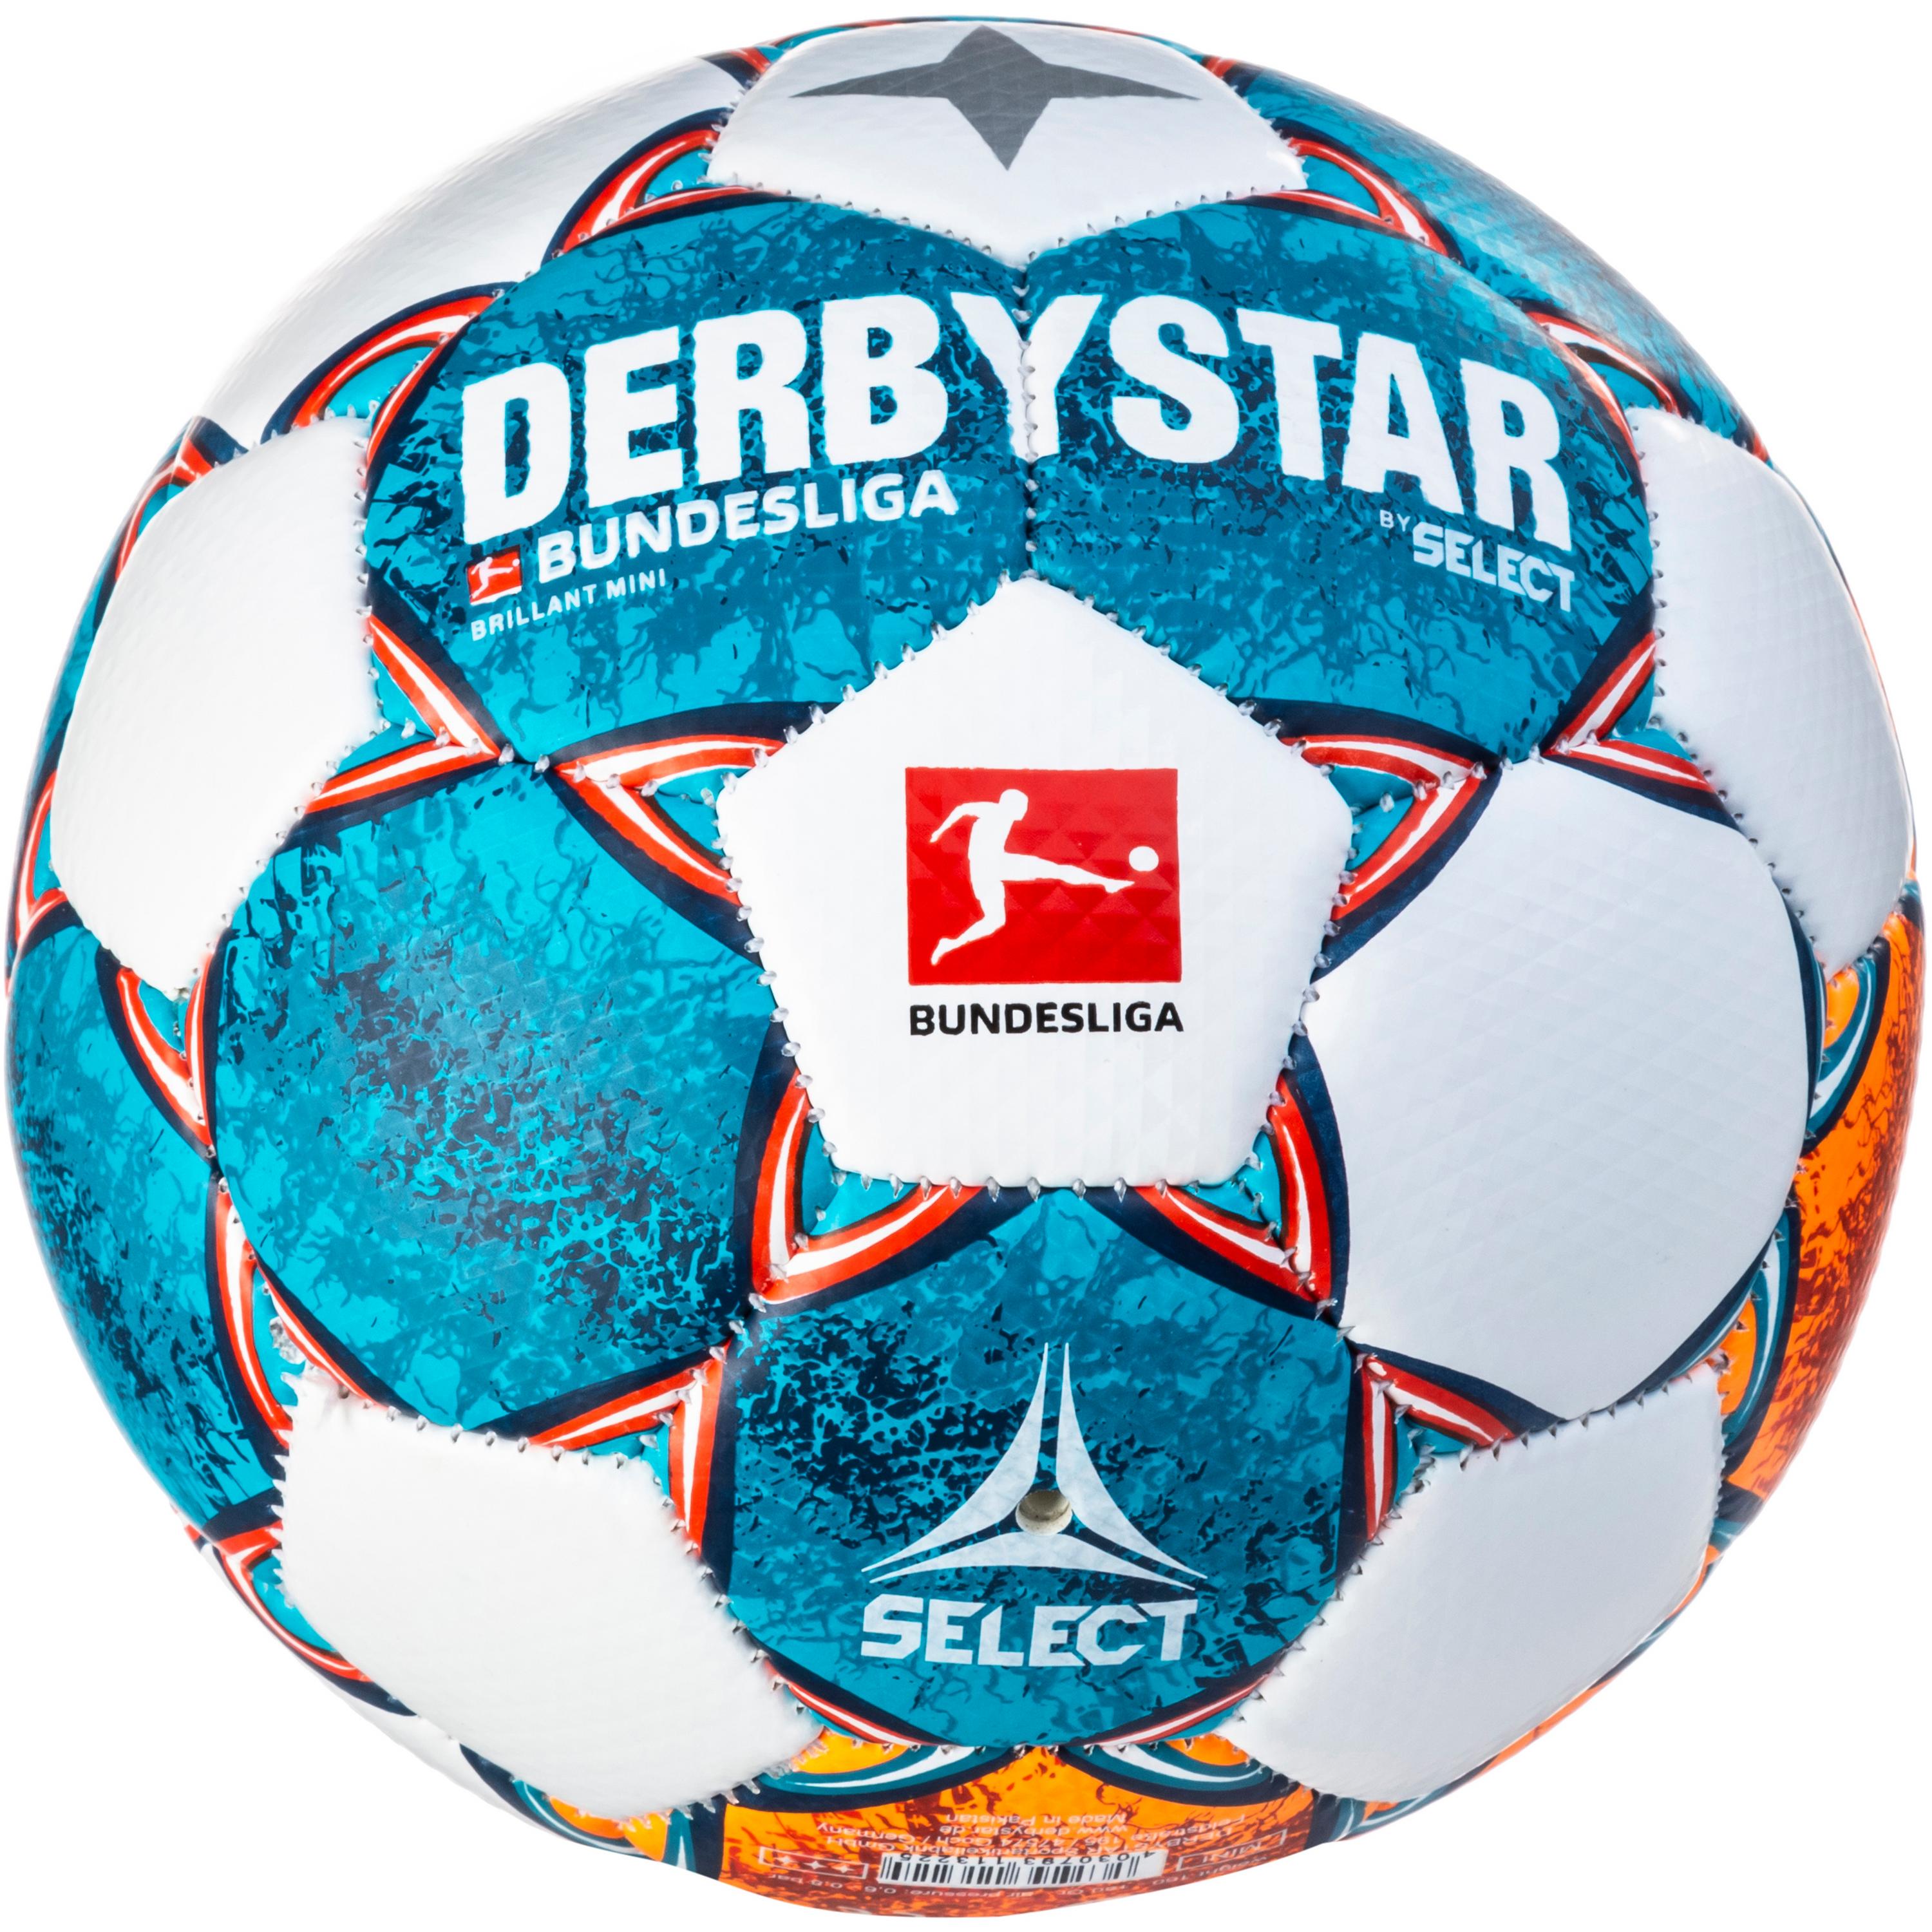 Image of Derbystar Miniball BL Brillant Mini v21 Miniball